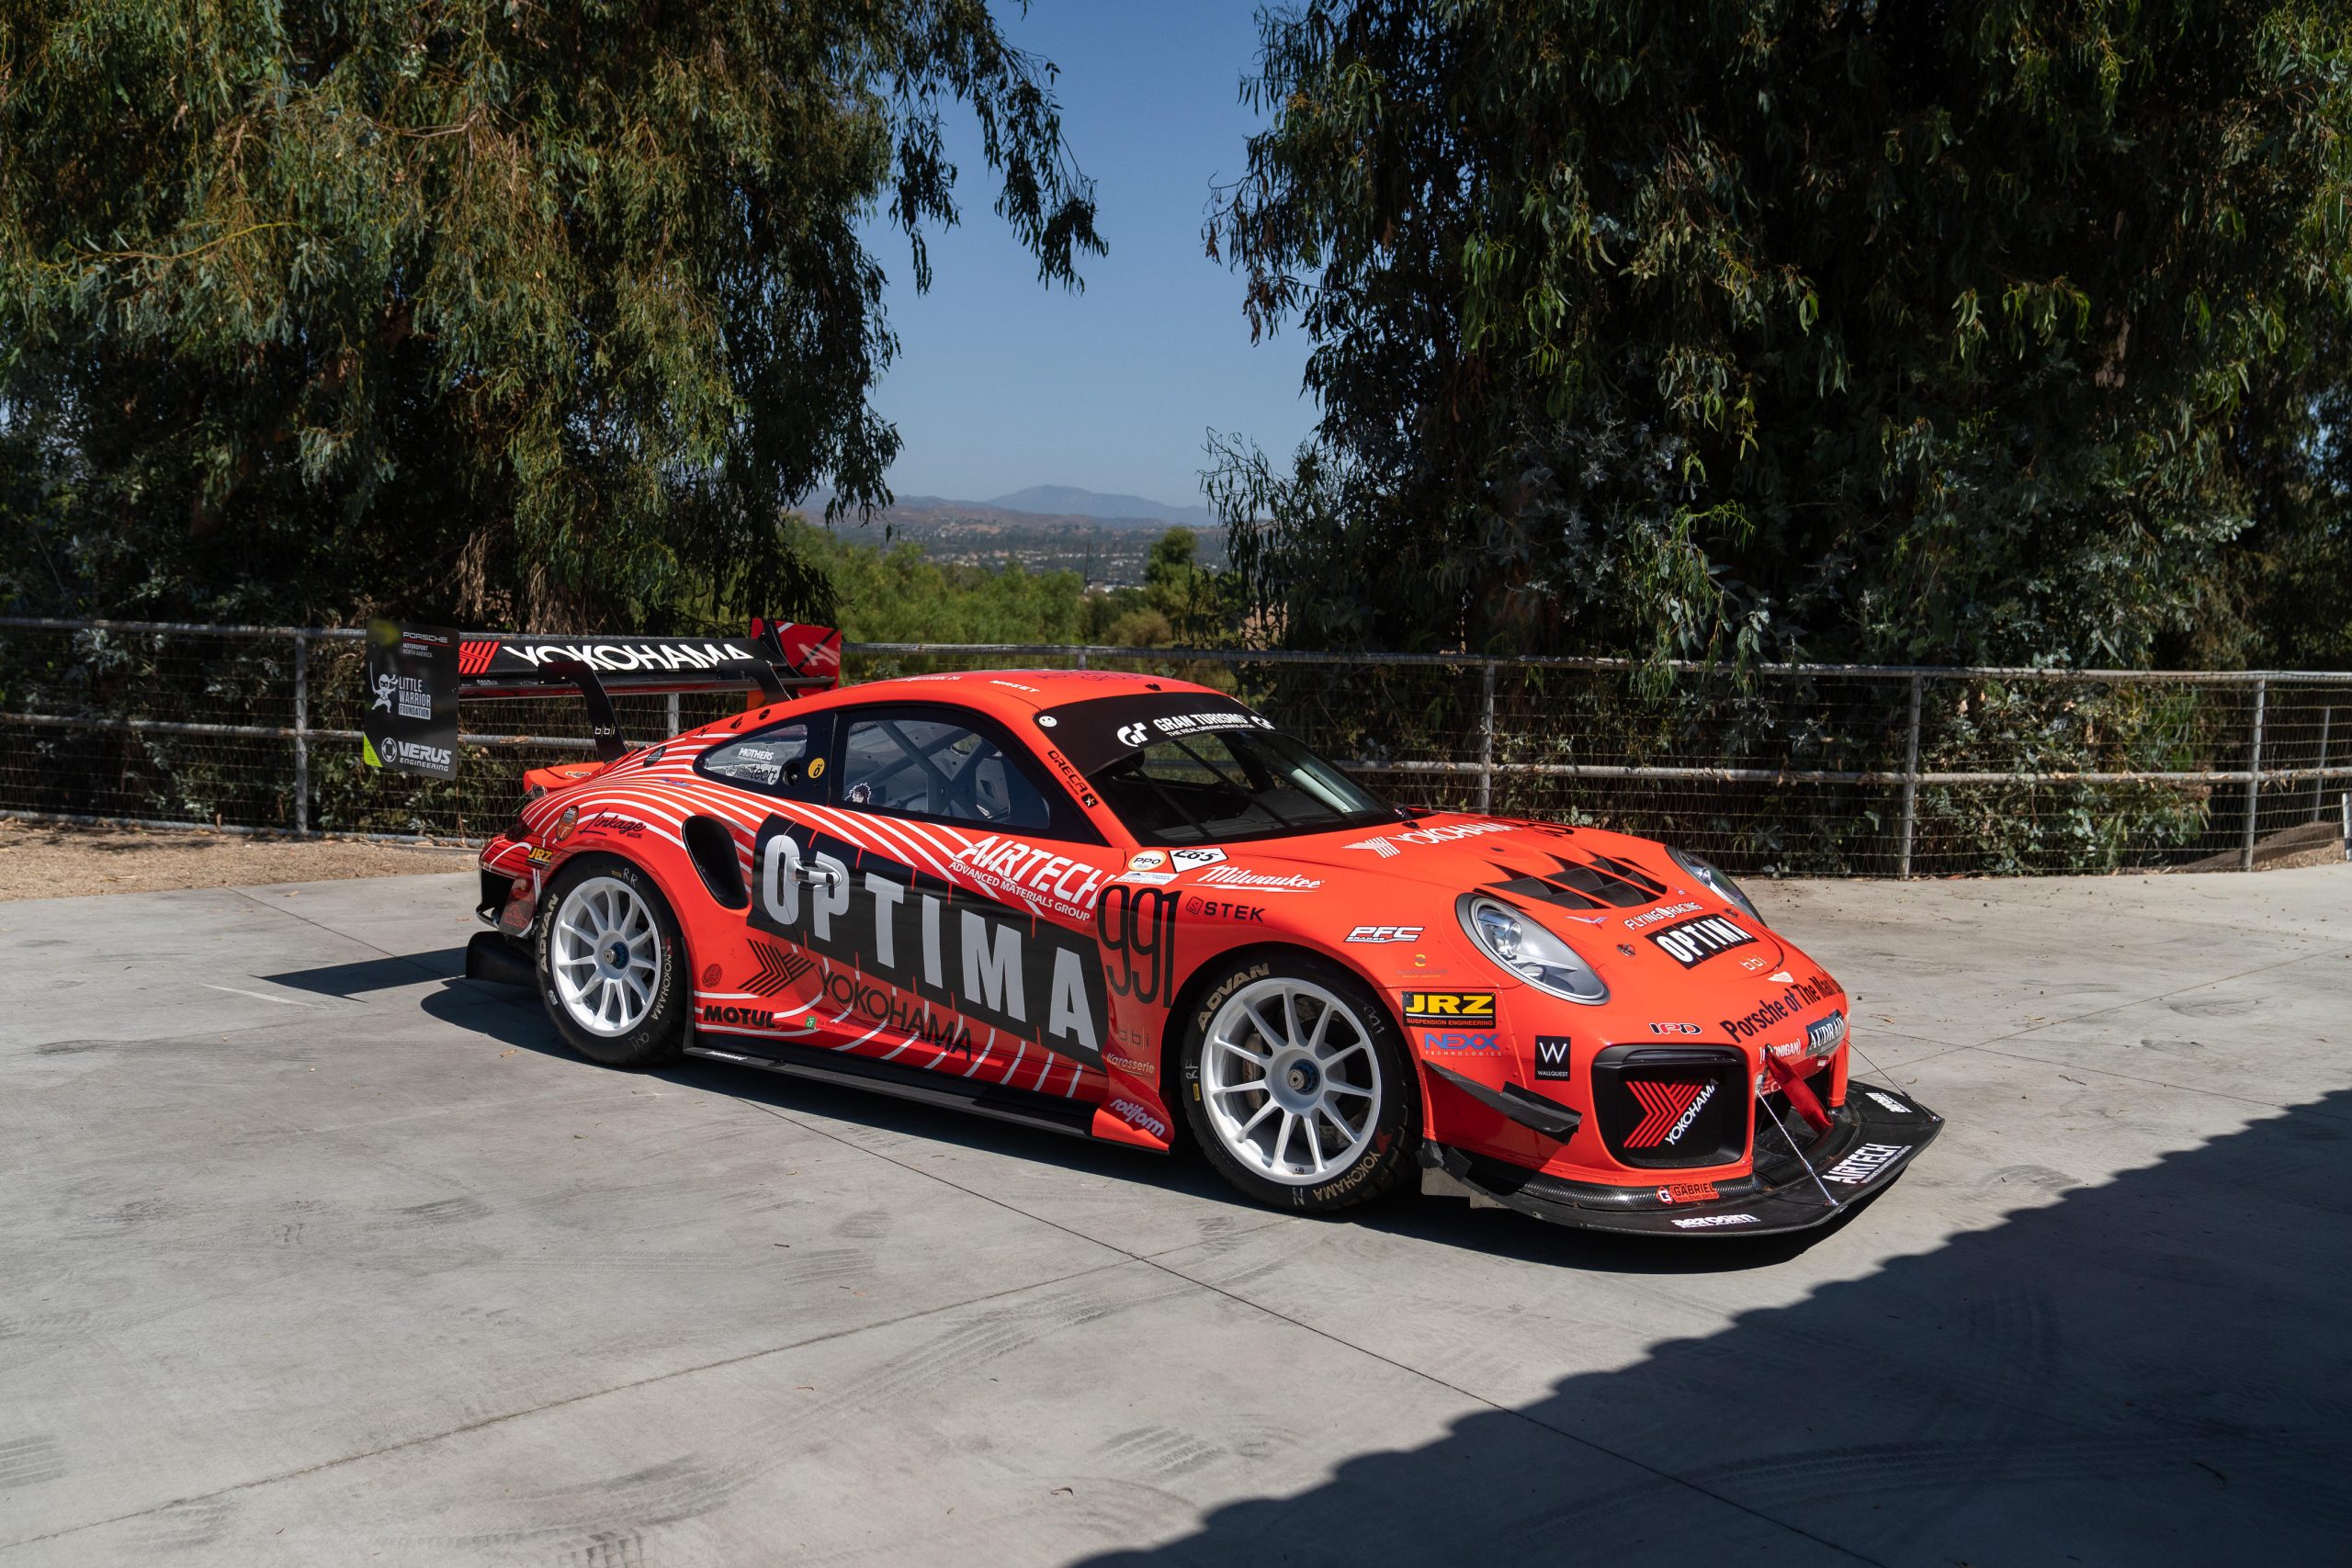 2014 Porsche 911 GT America